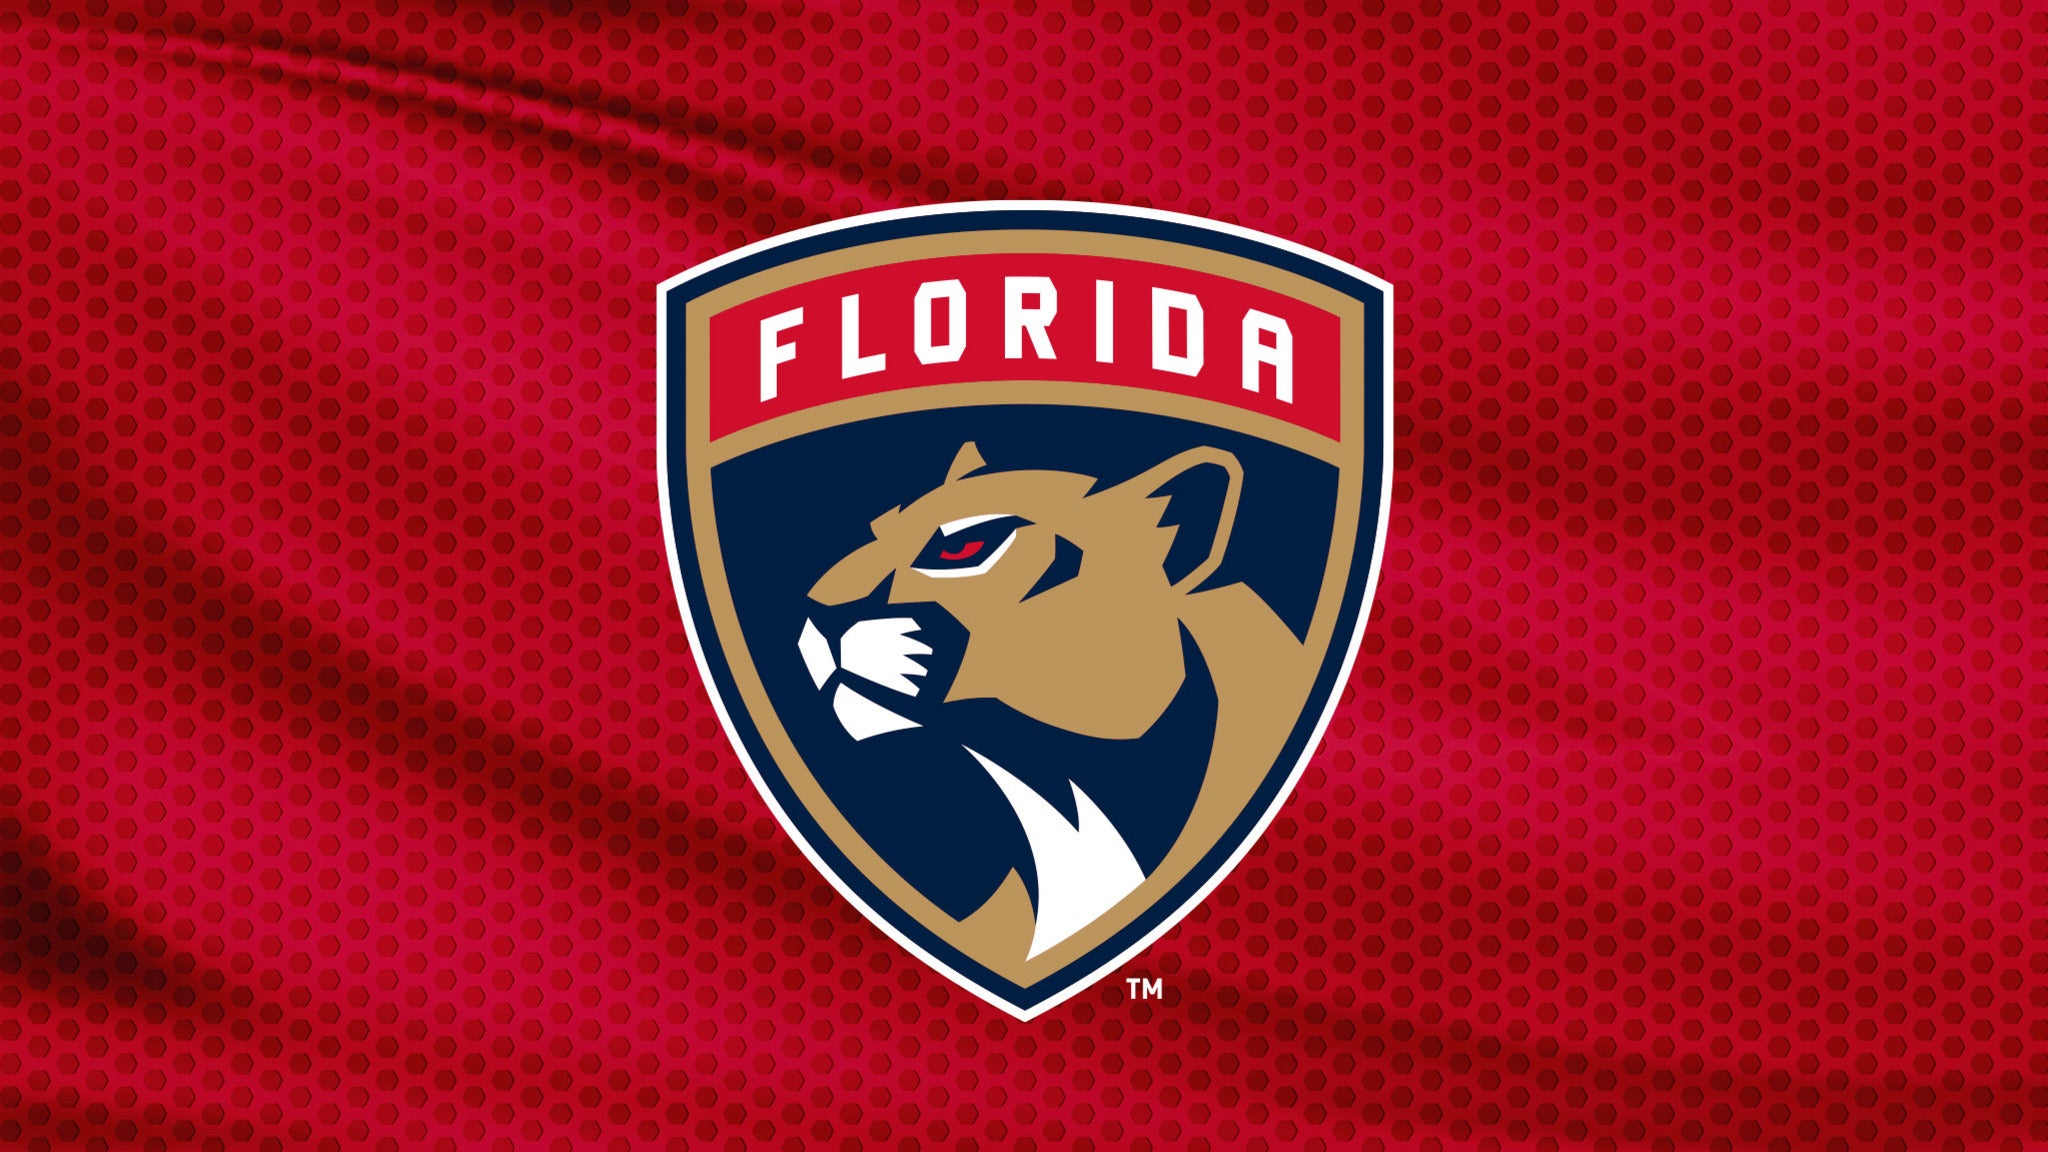 Florida Panthers vs. Seattle Kraken at FLA Live Arena - Sunrise, FL 33323